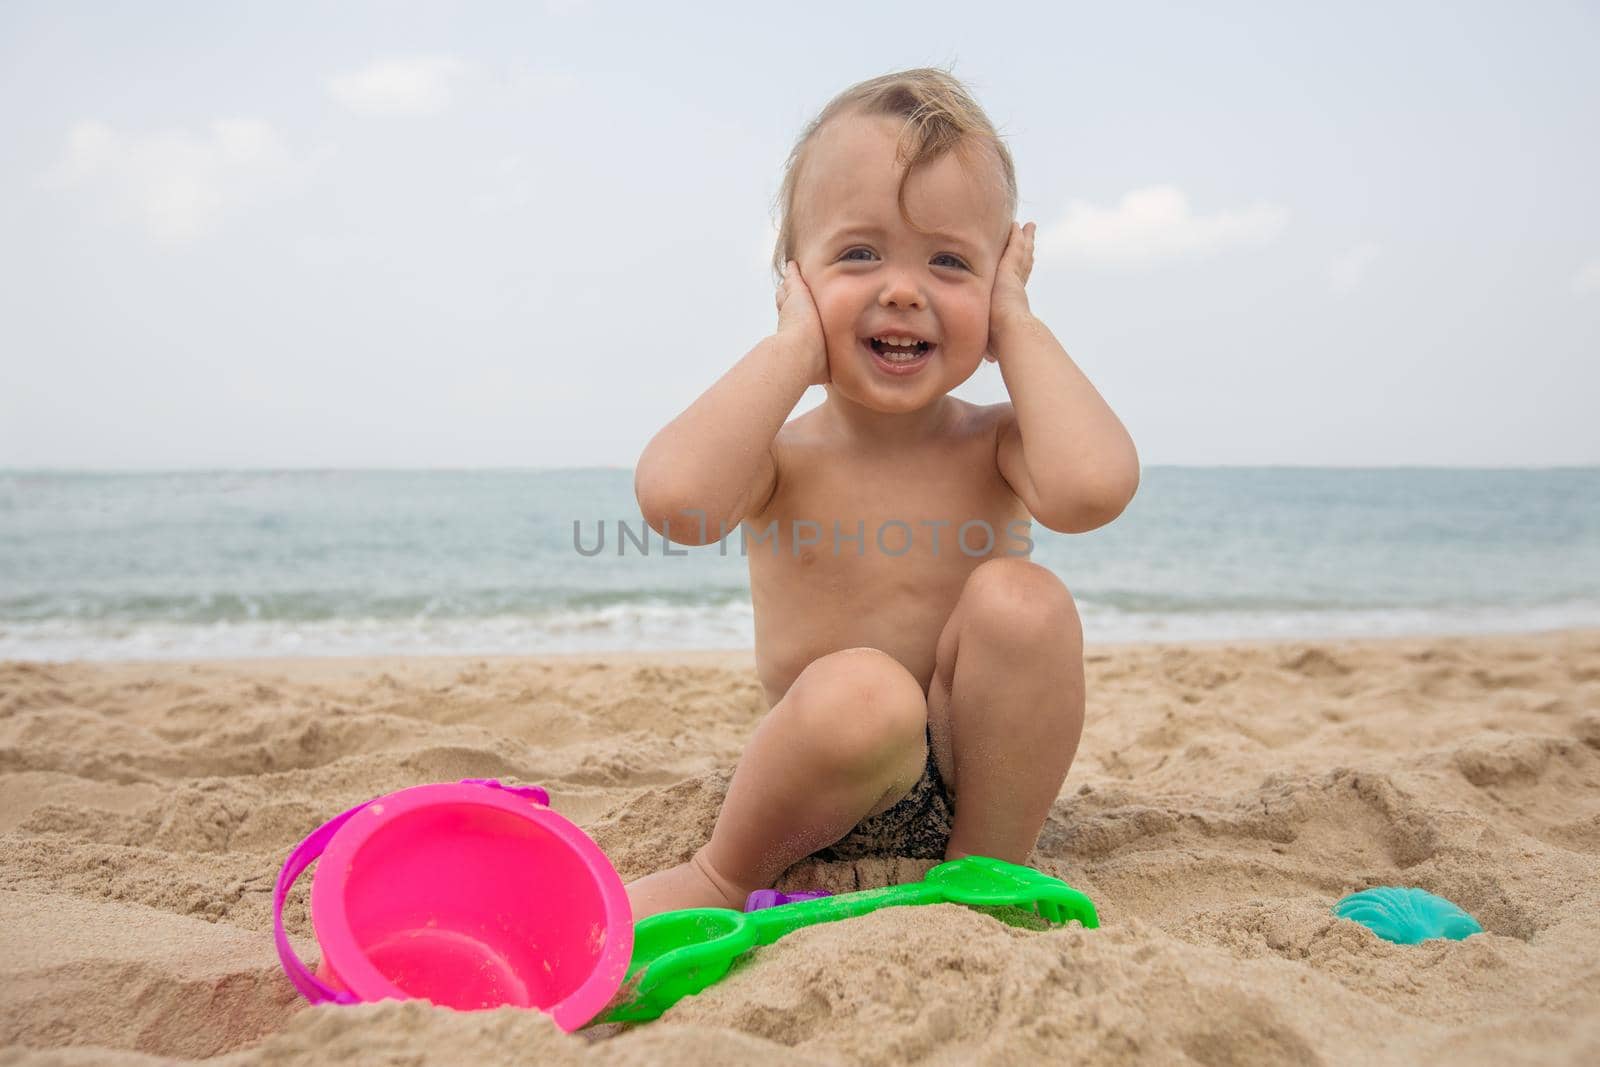 Adorable infant on sandy beach by Demkat